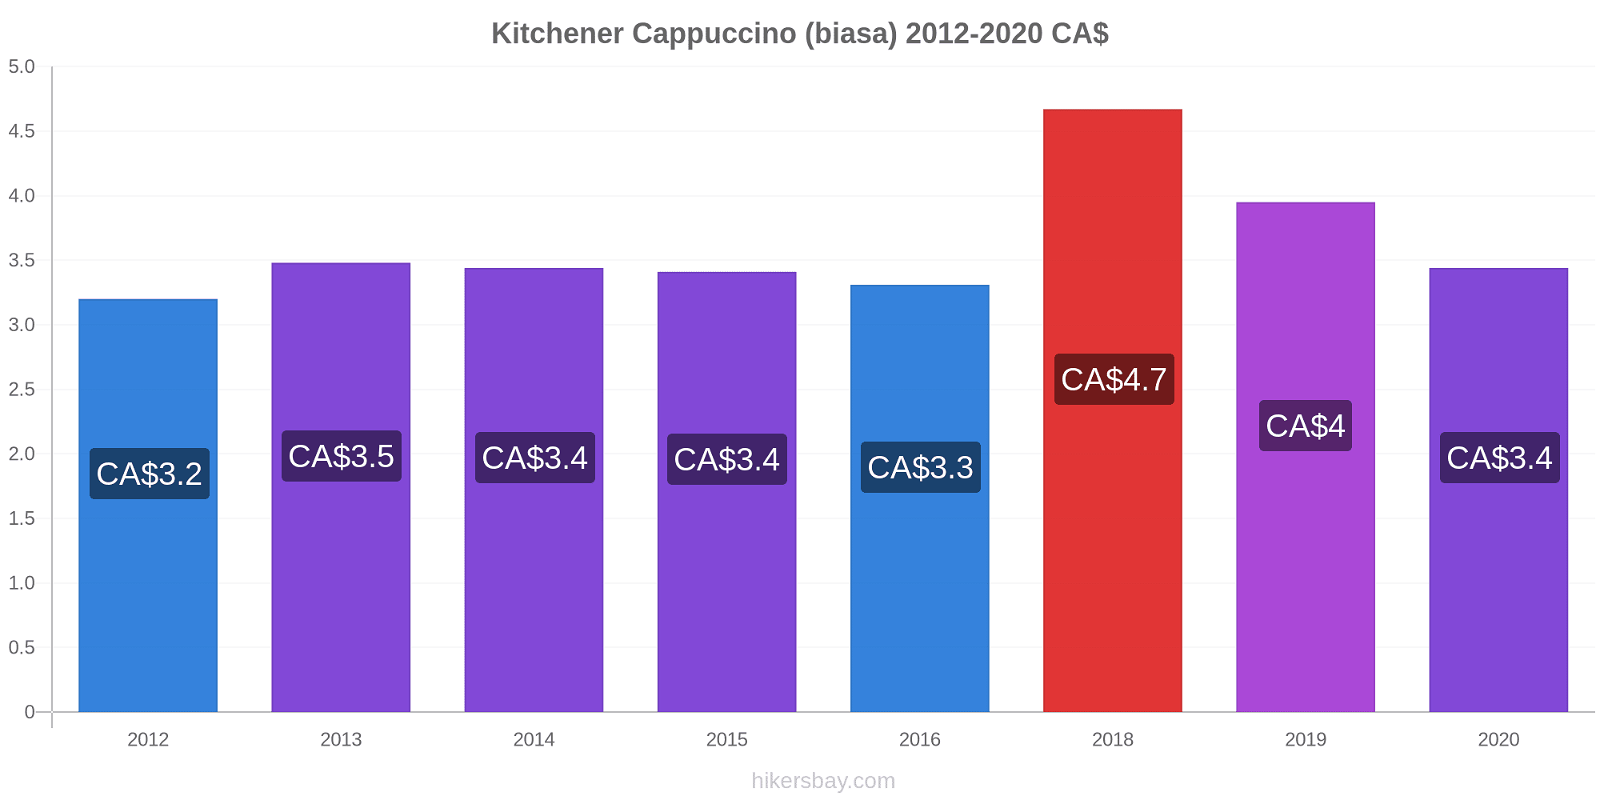 Kitchener perubahan harga Cappuccino (biasa) hikersbay.com